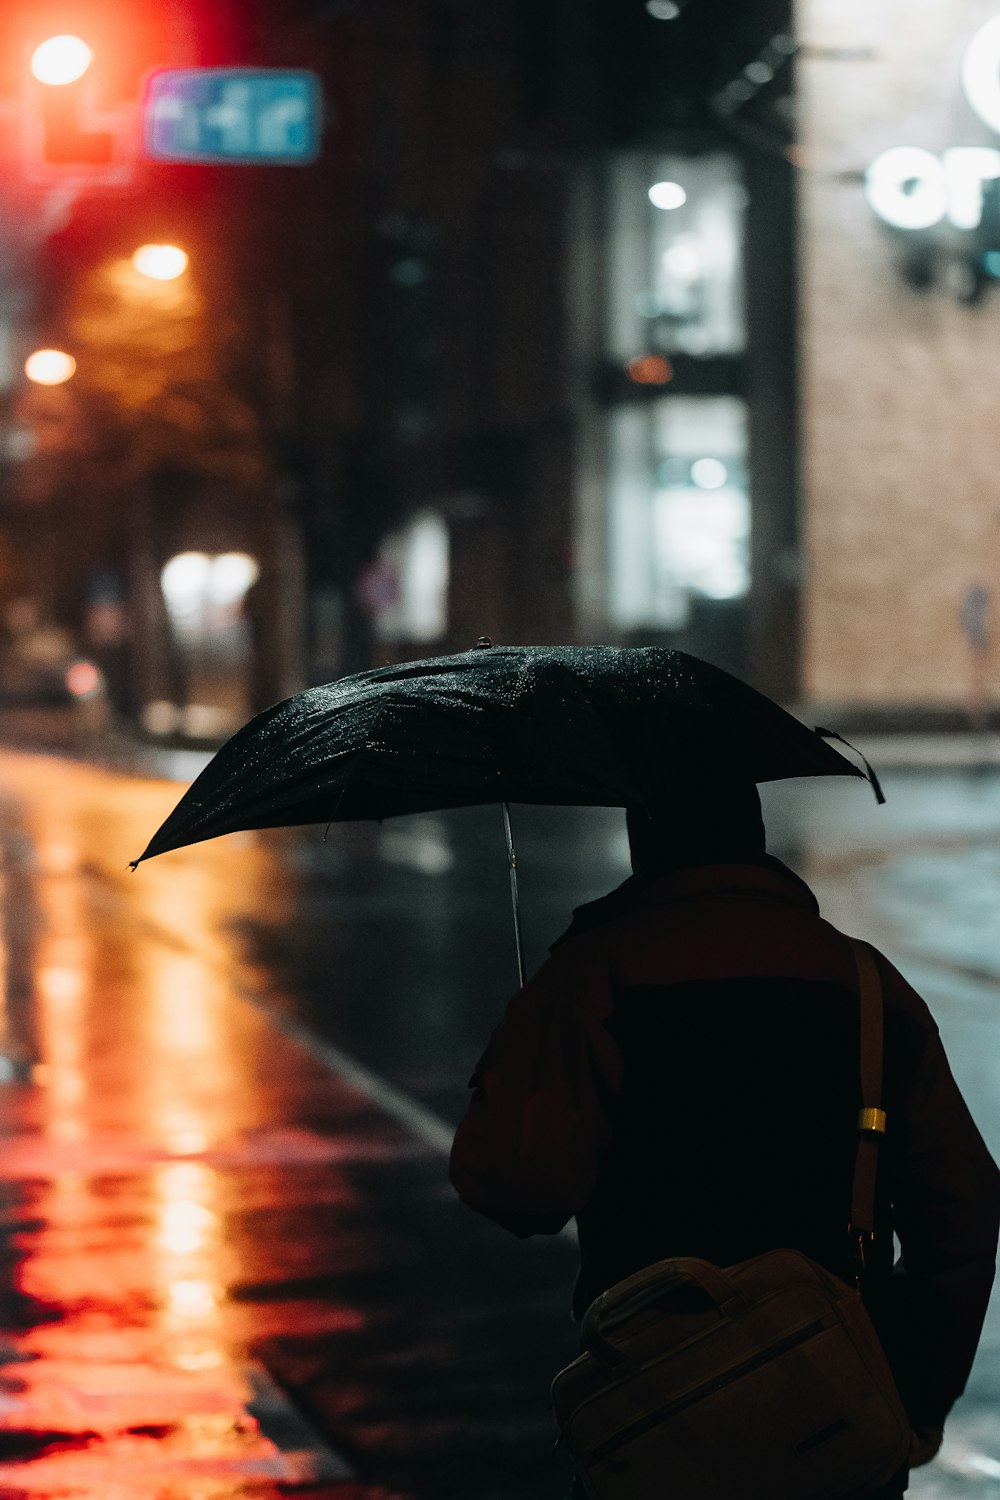 a person carrying an umbrella